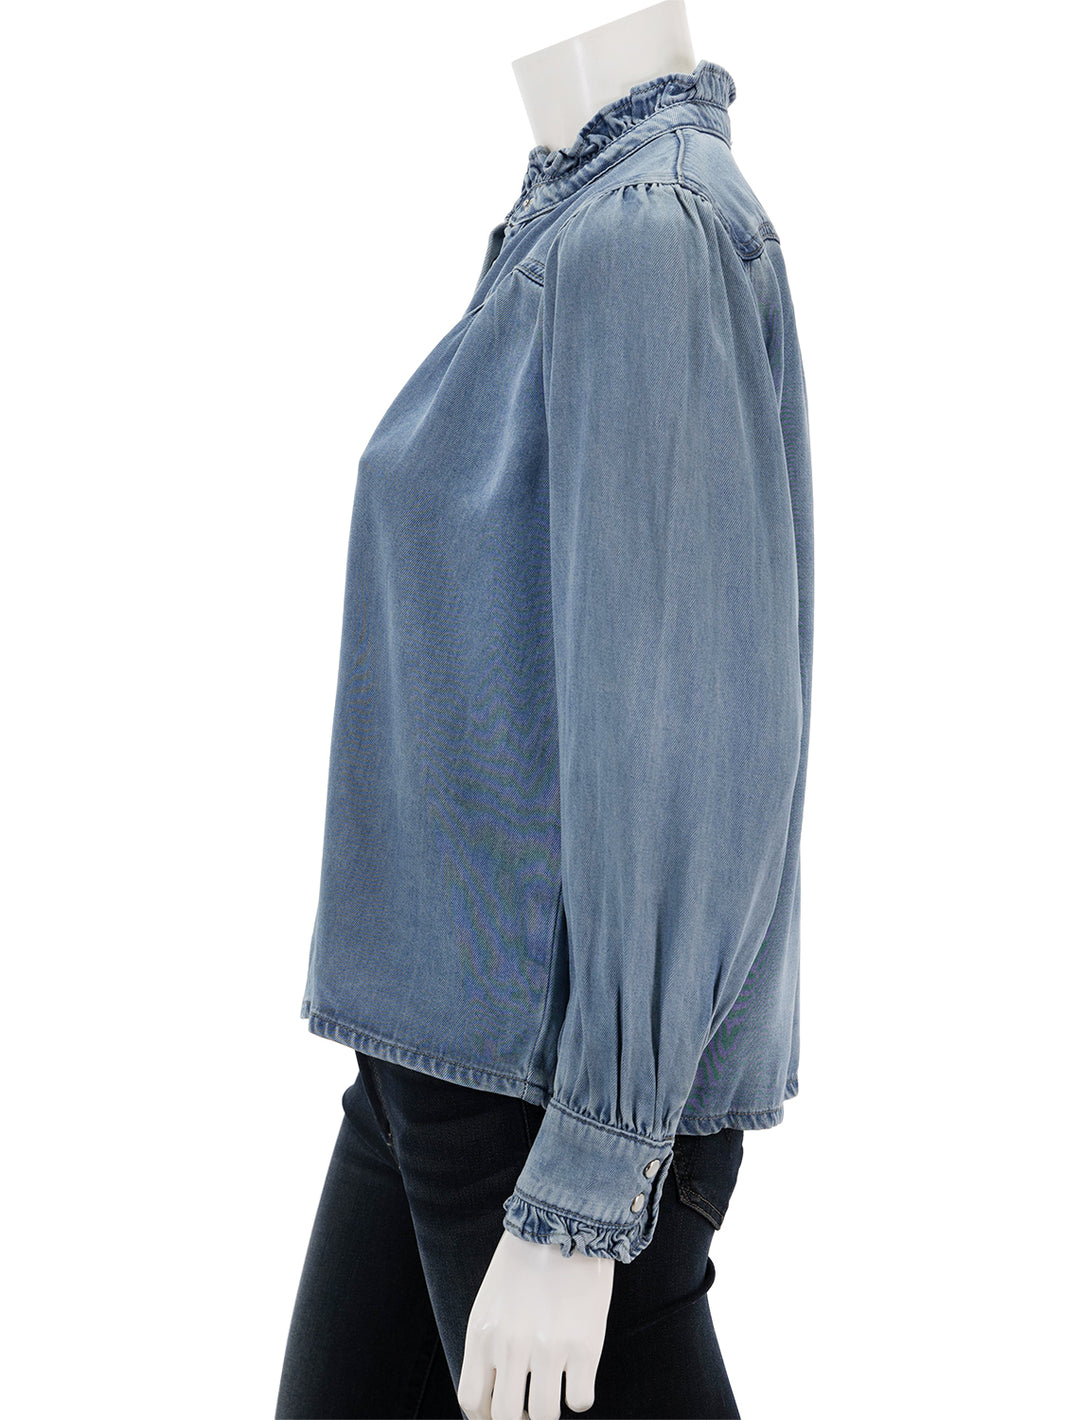 Side view of Suncoo Paris' laura blouse in bleu jean.